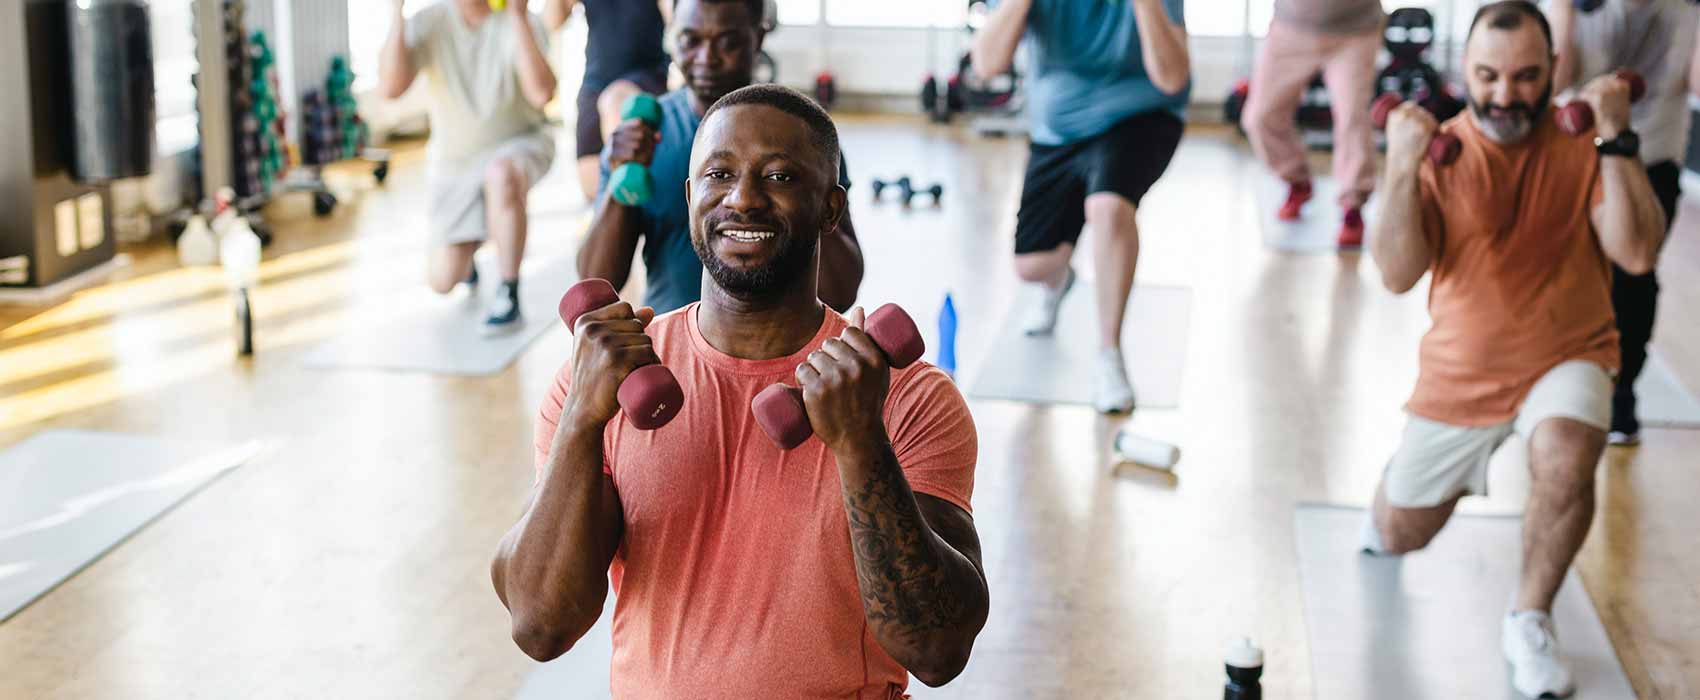 Three Ways A Medicare Advantage Fitness Plan Can Help Reduce